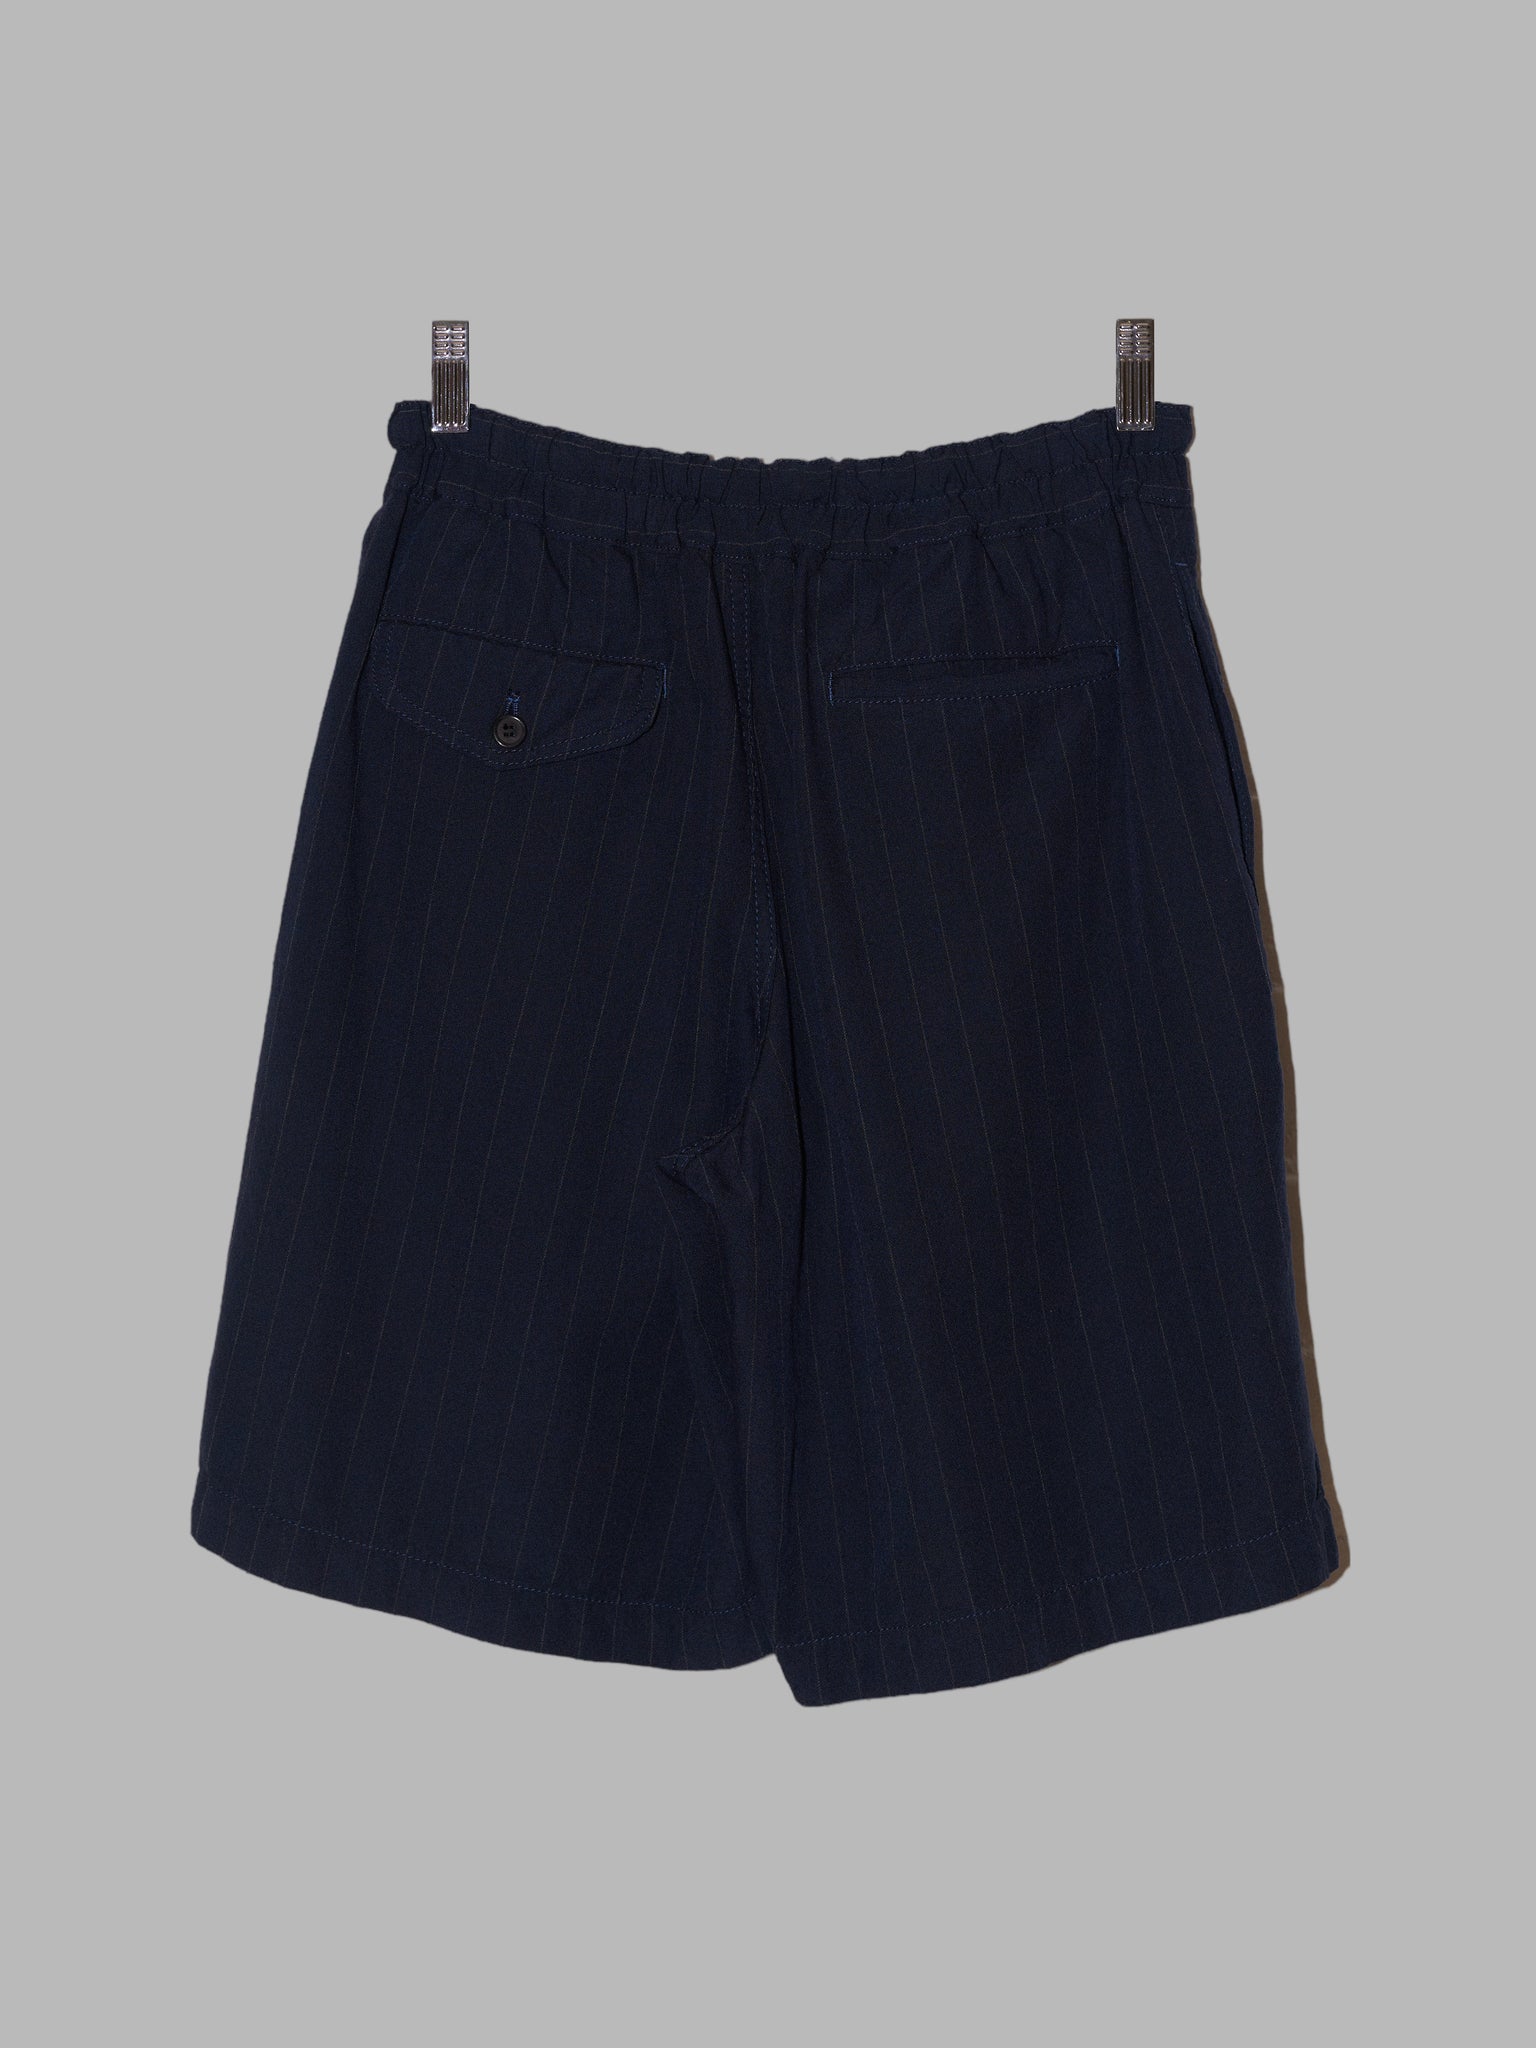 Comme des Garcons Homme Deux 2012 dark navy wool stripe elastic waist shorts XXS